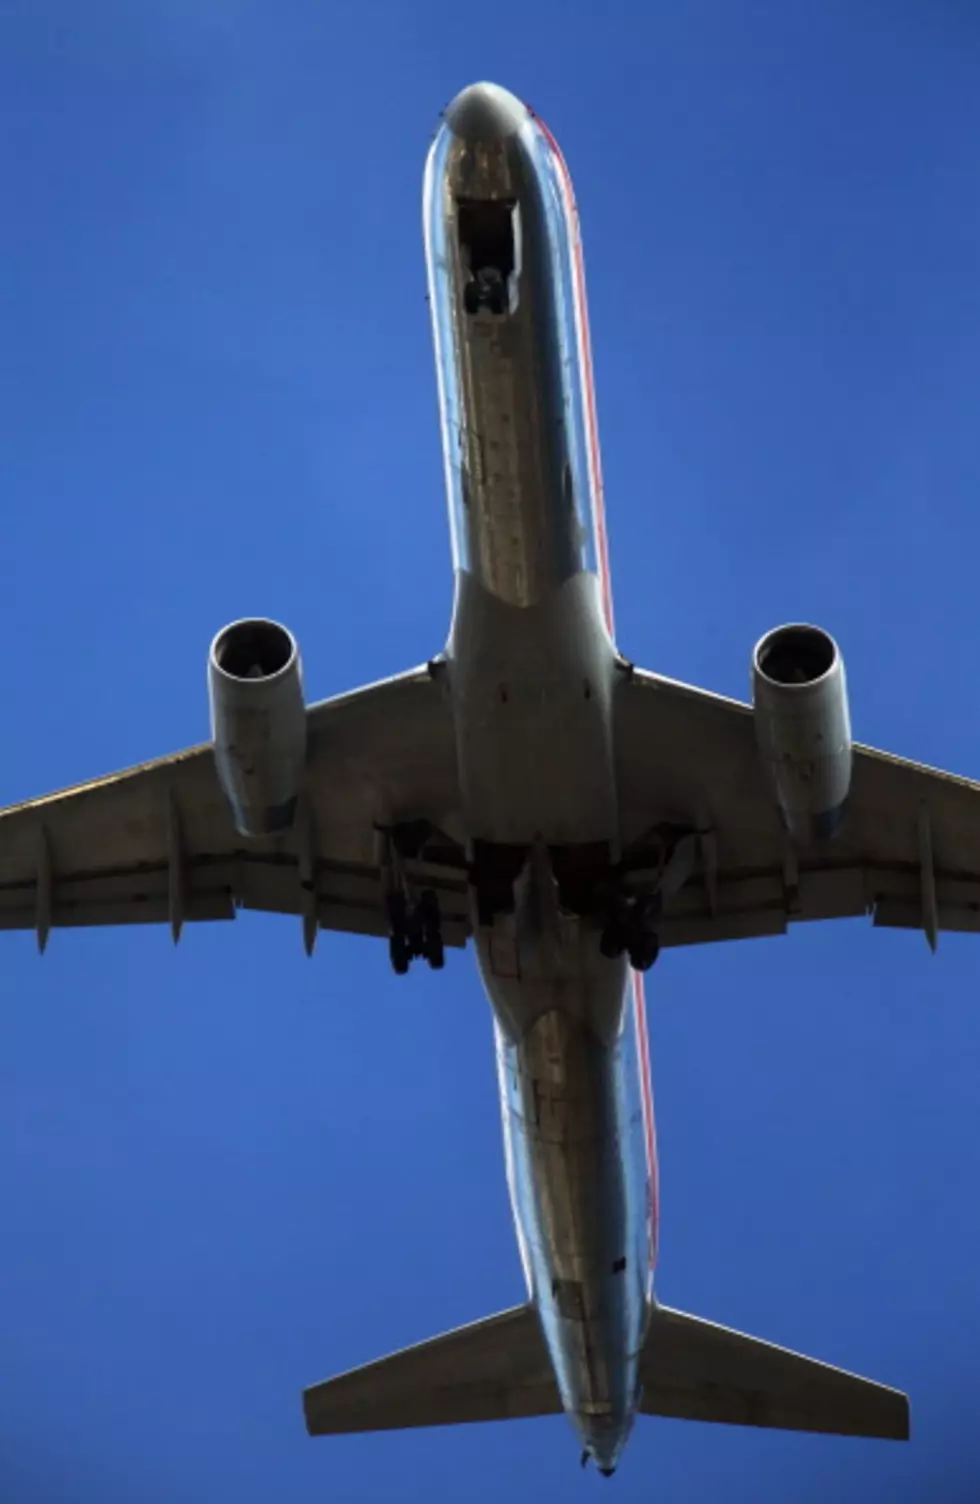 Free Beer & Hot Wings: Teen Stowaway Survives Flight from California to Hawaii in Plane’s Wheel Well [Video]